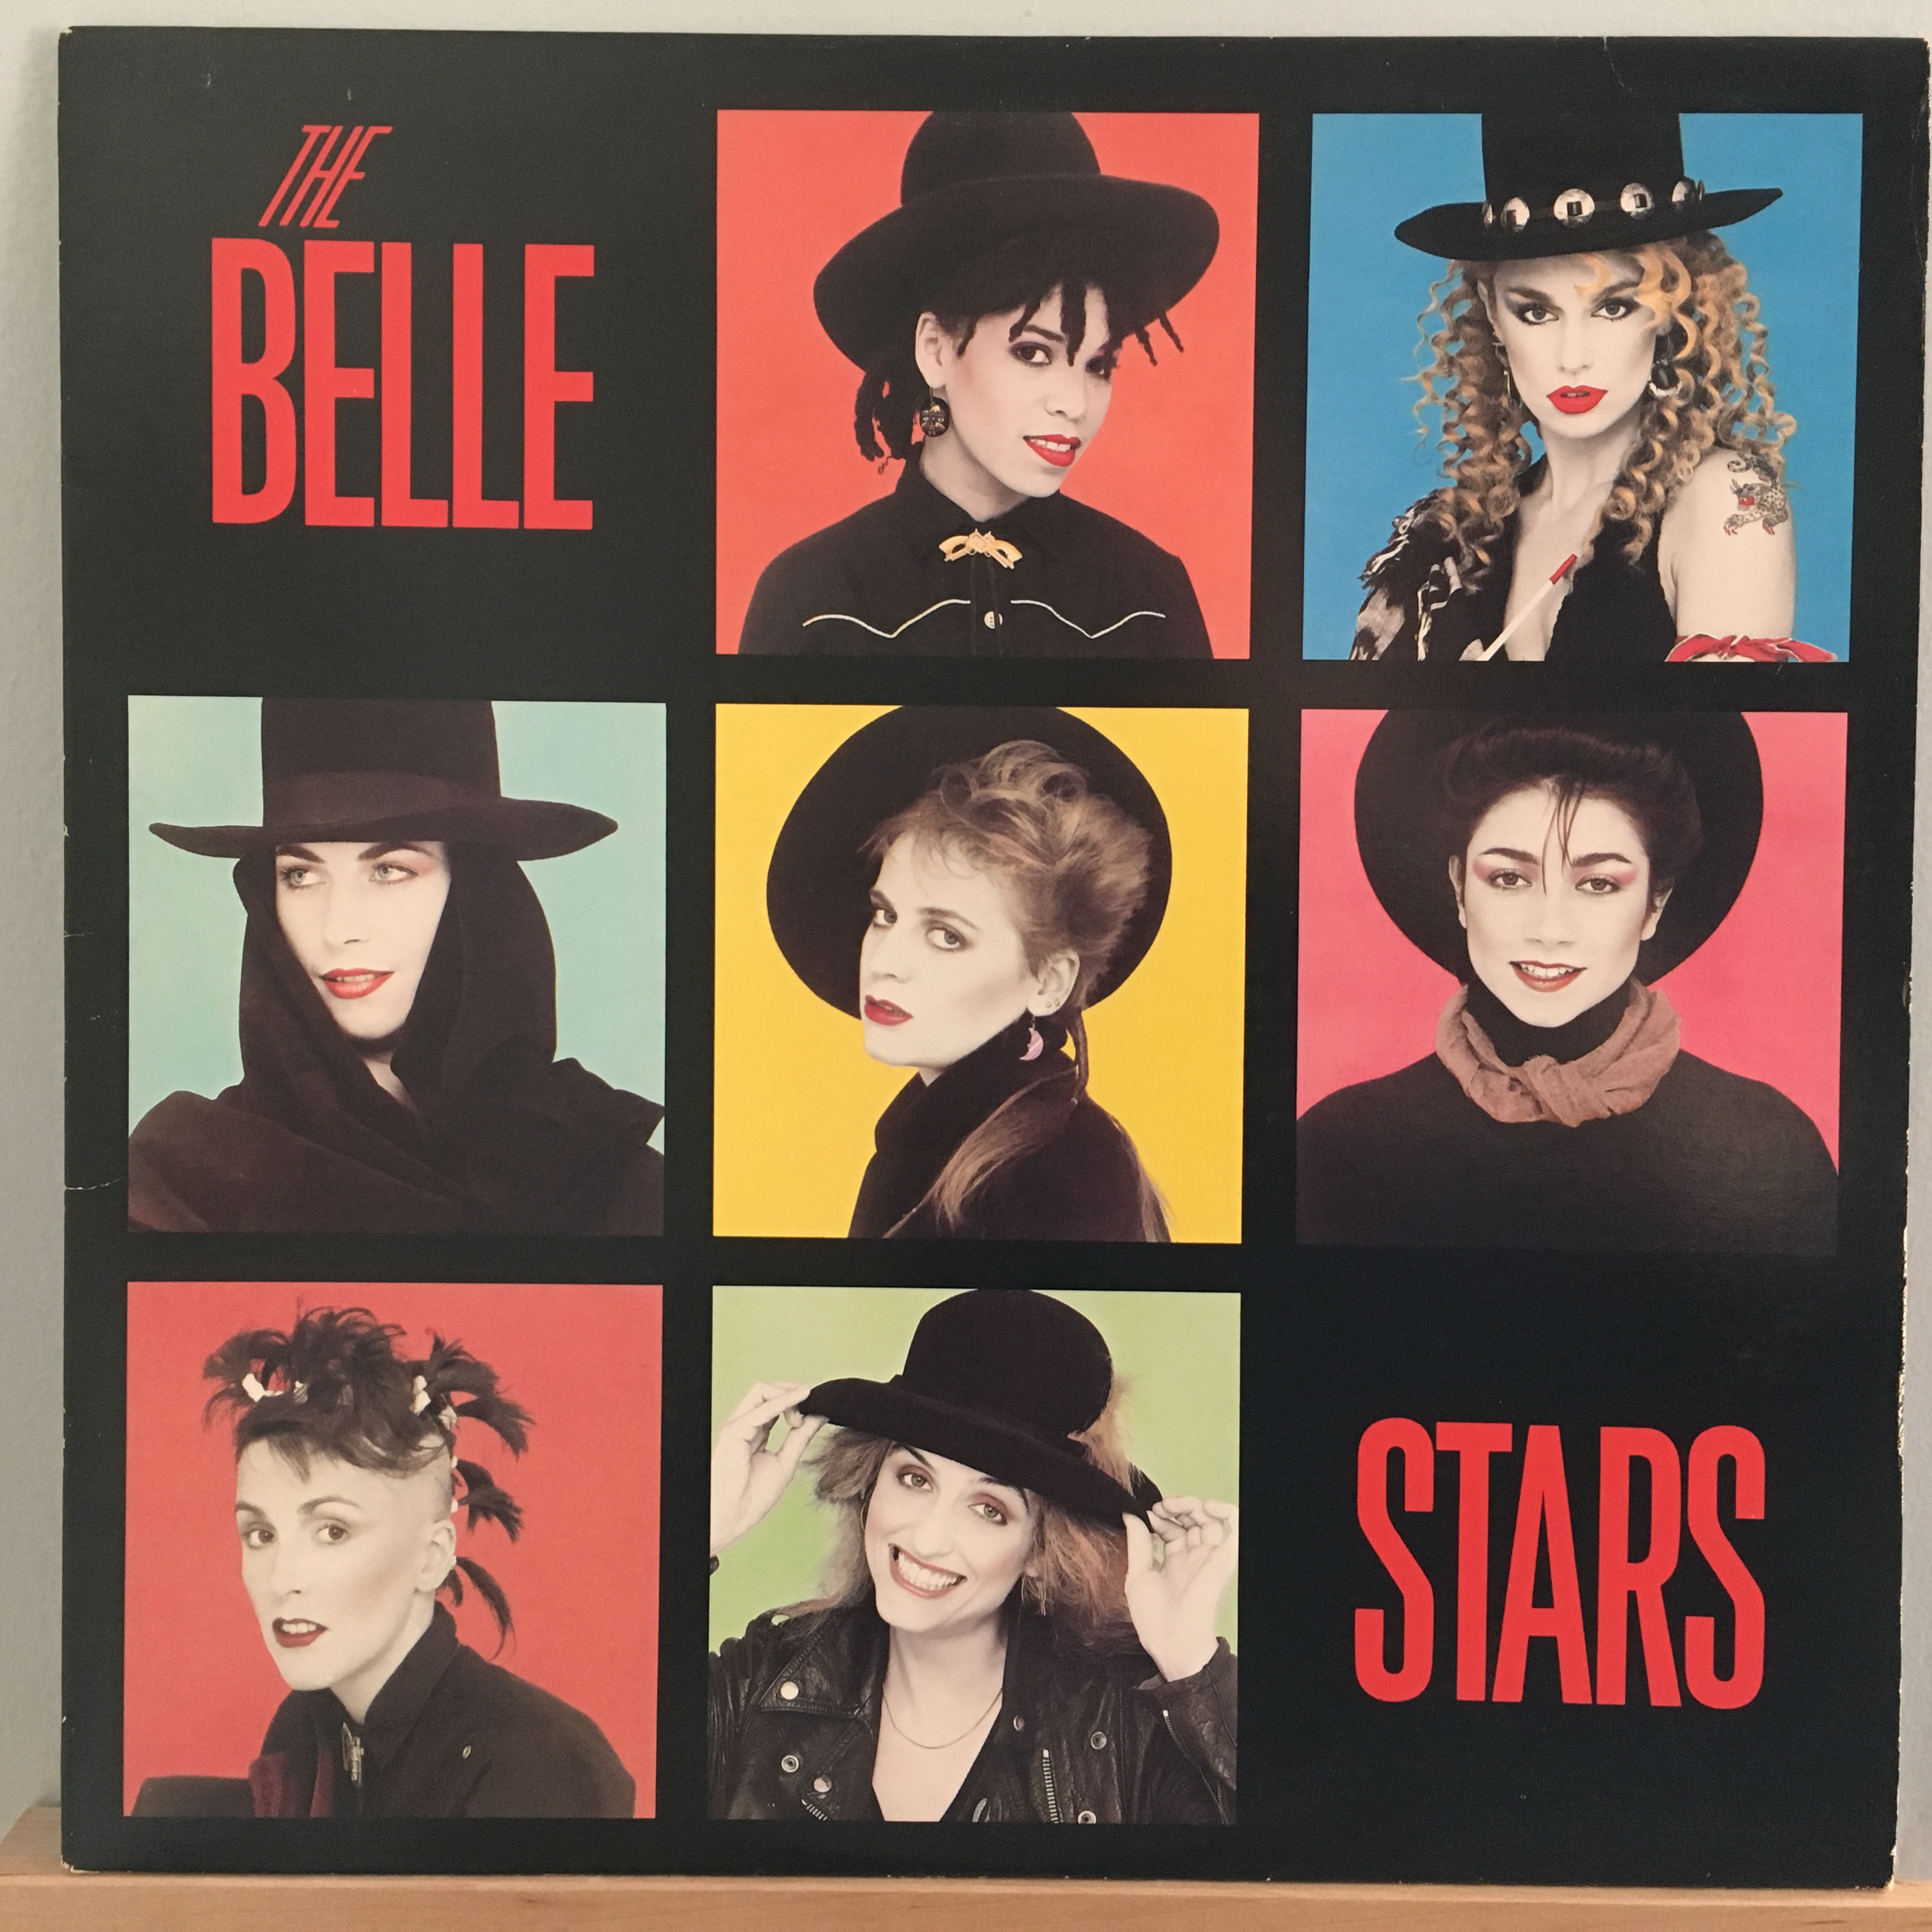 The Belle Stars eponymous album cover